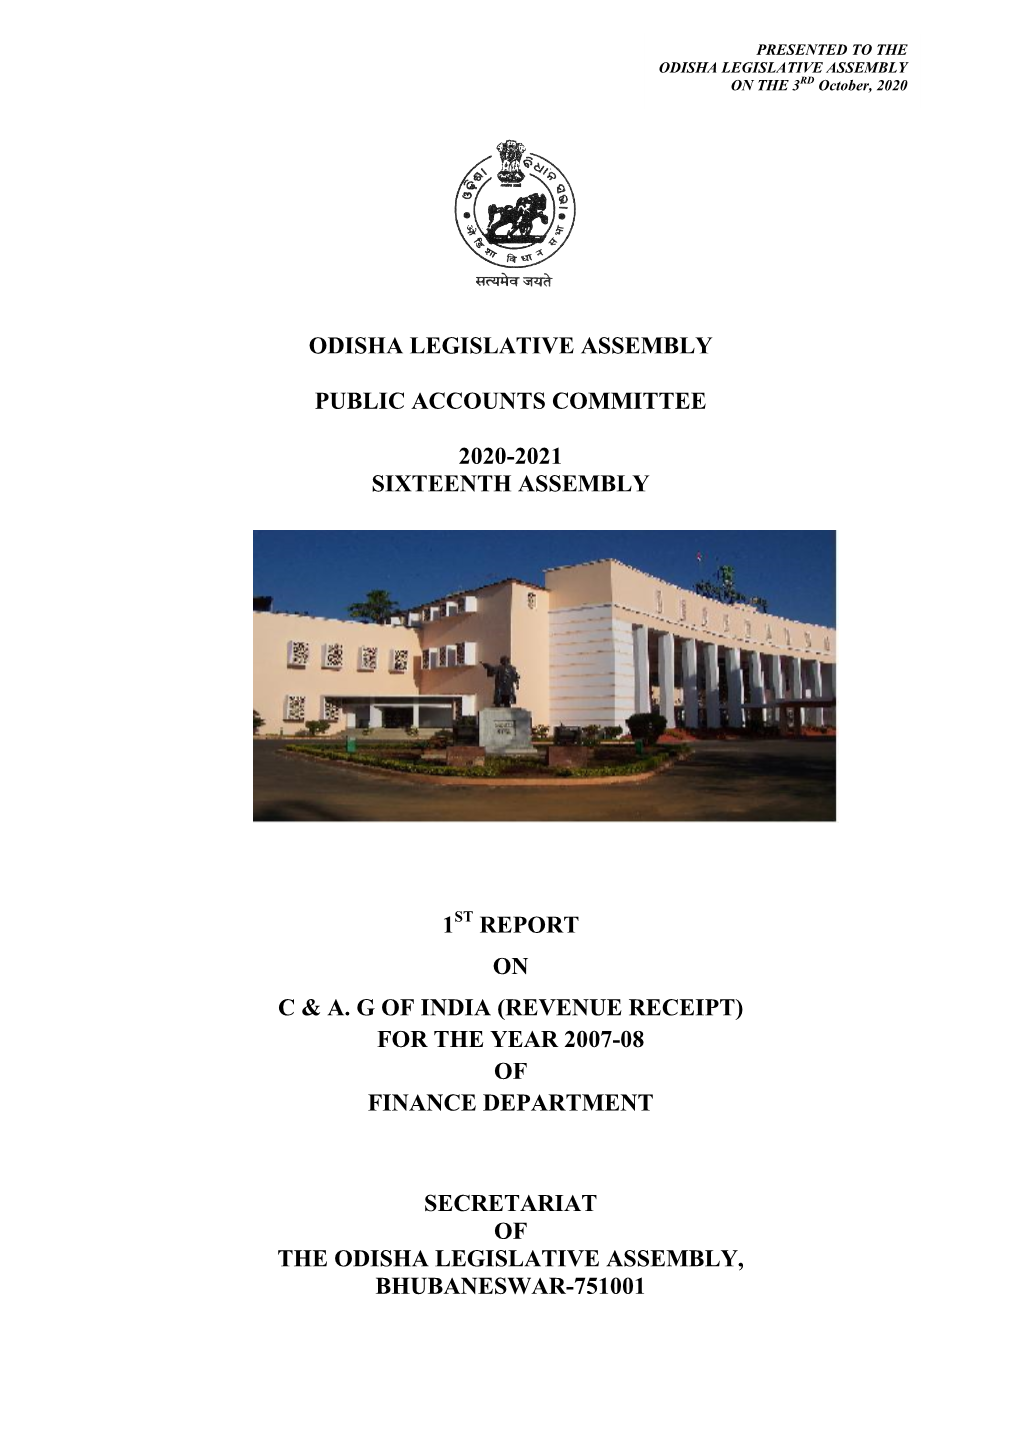 Odisha Legislative Assembly Public Accounts